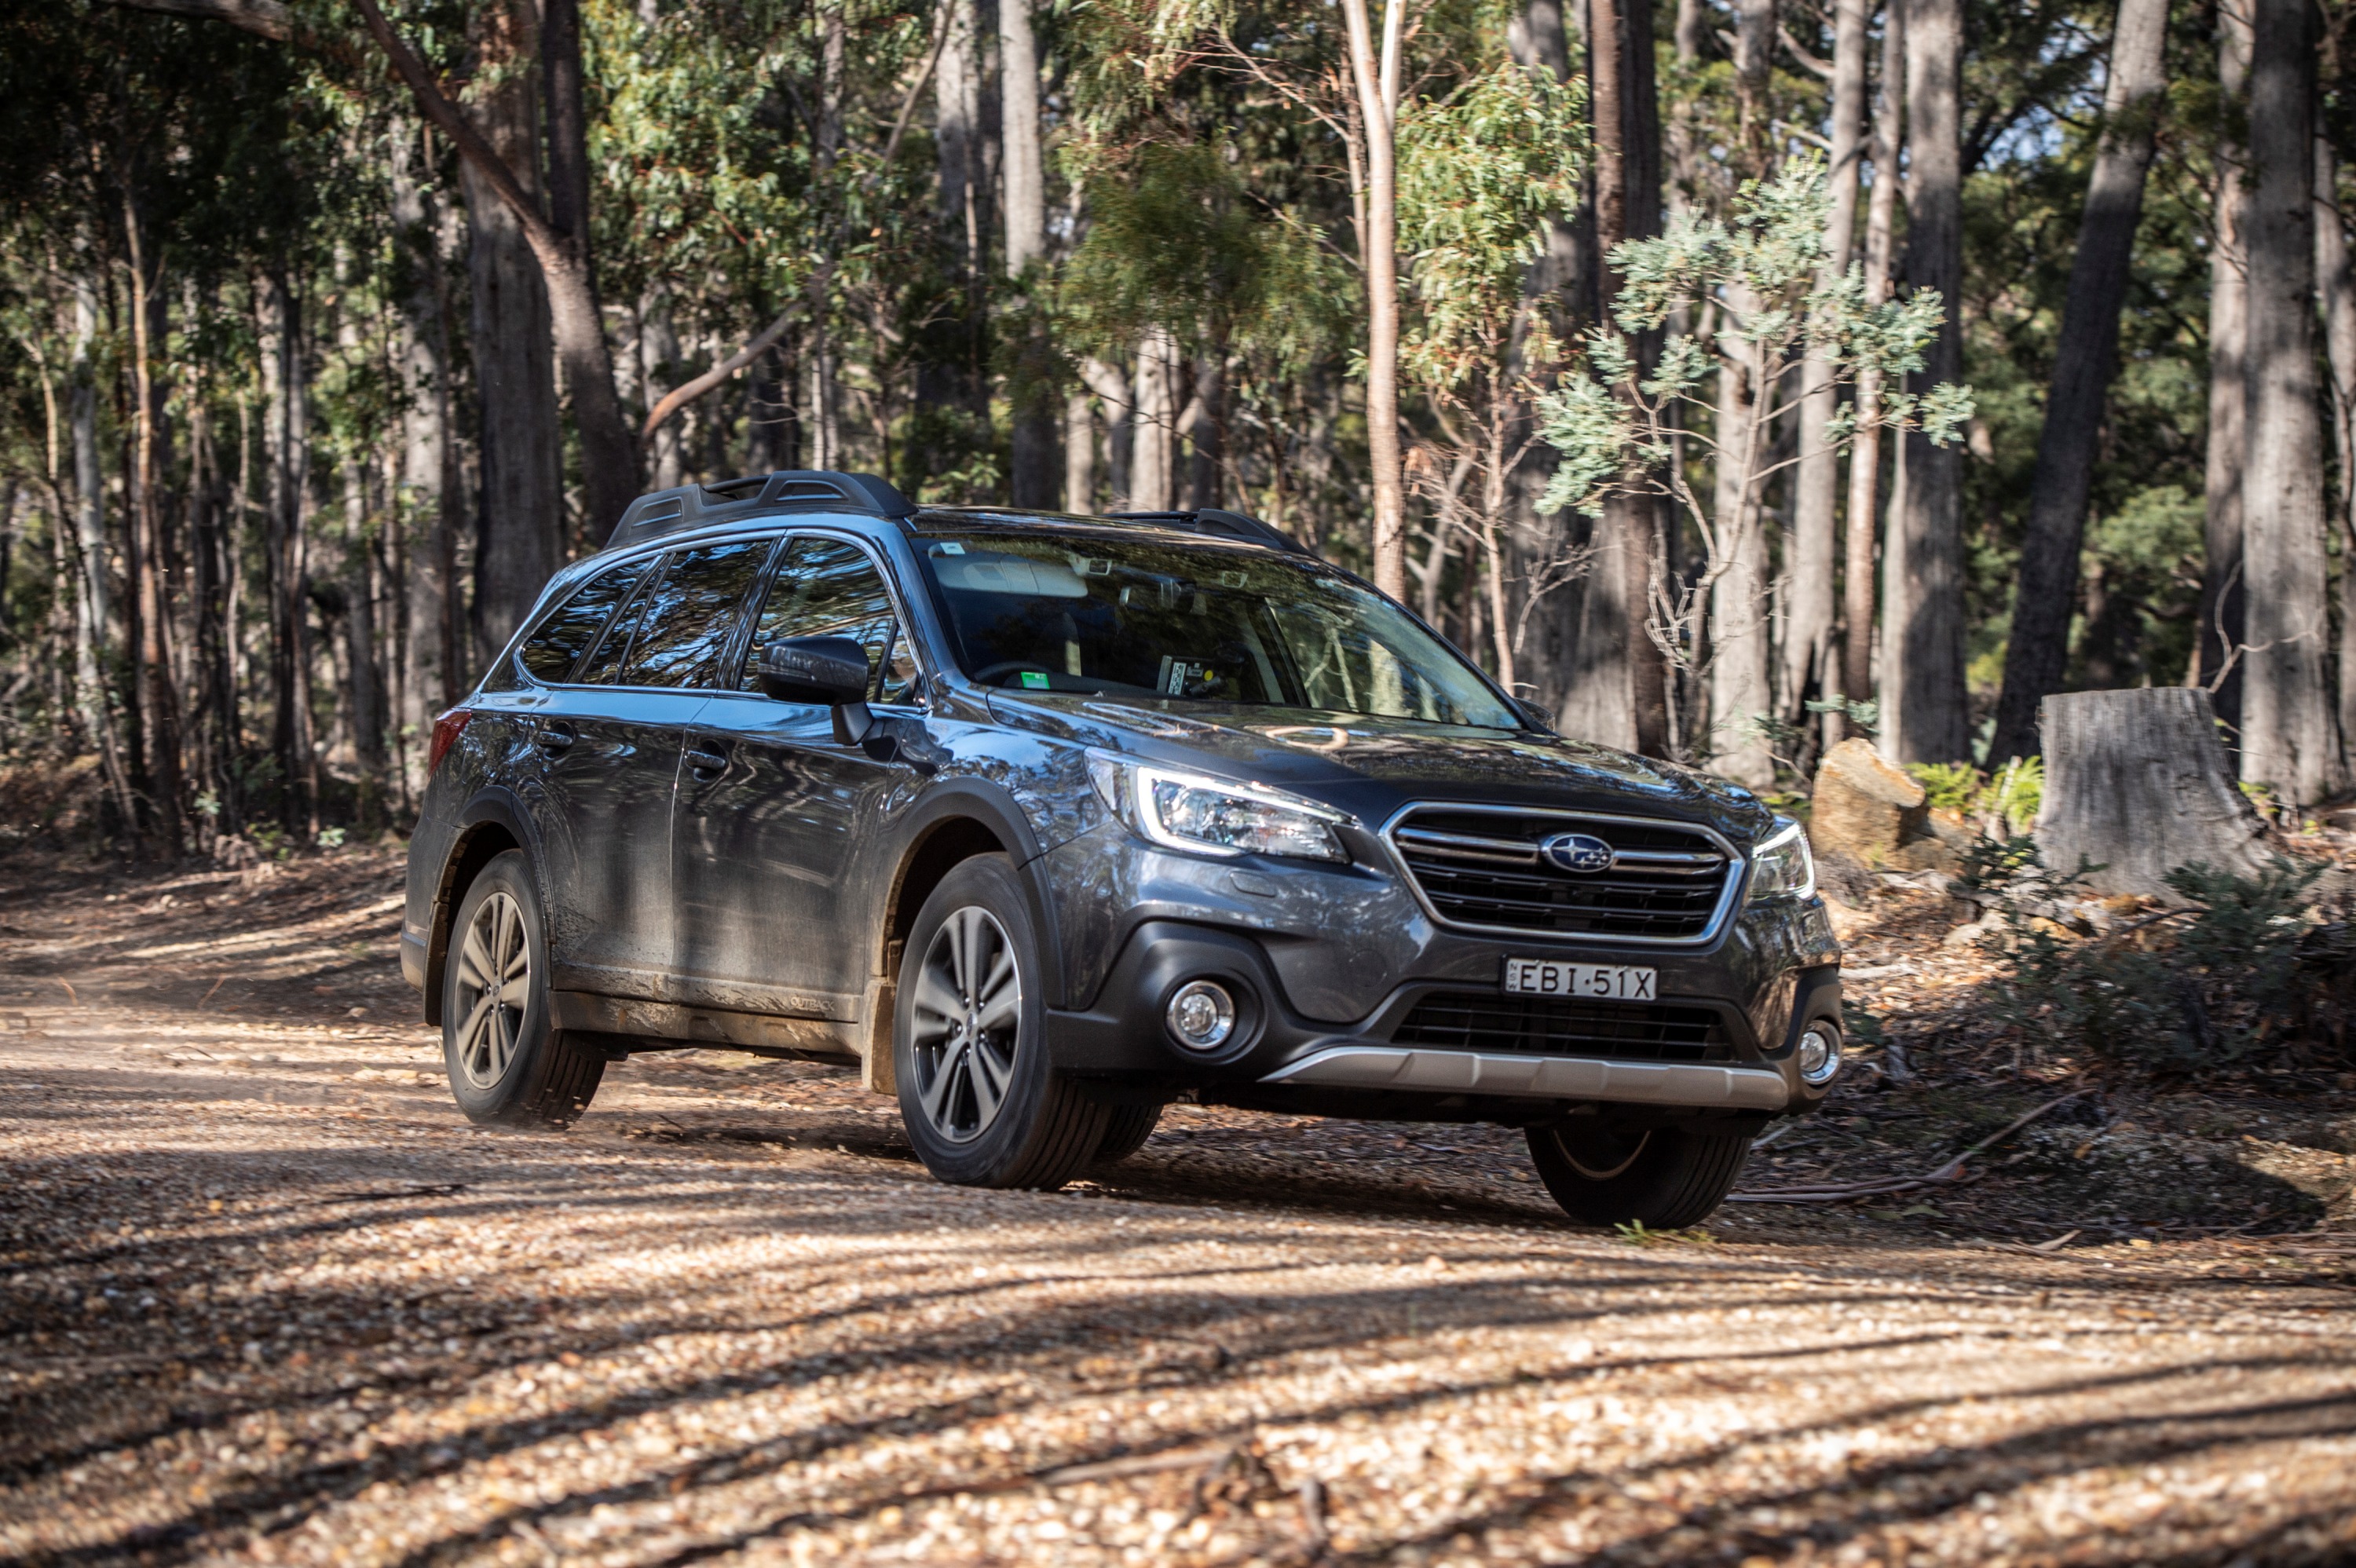 2019 Subaru Tasmania SUV Experience, June 19-21. Featuring Subaru Forester, Outback and XV vehicles. (Photo Narrative Post/Matthias Engesser)